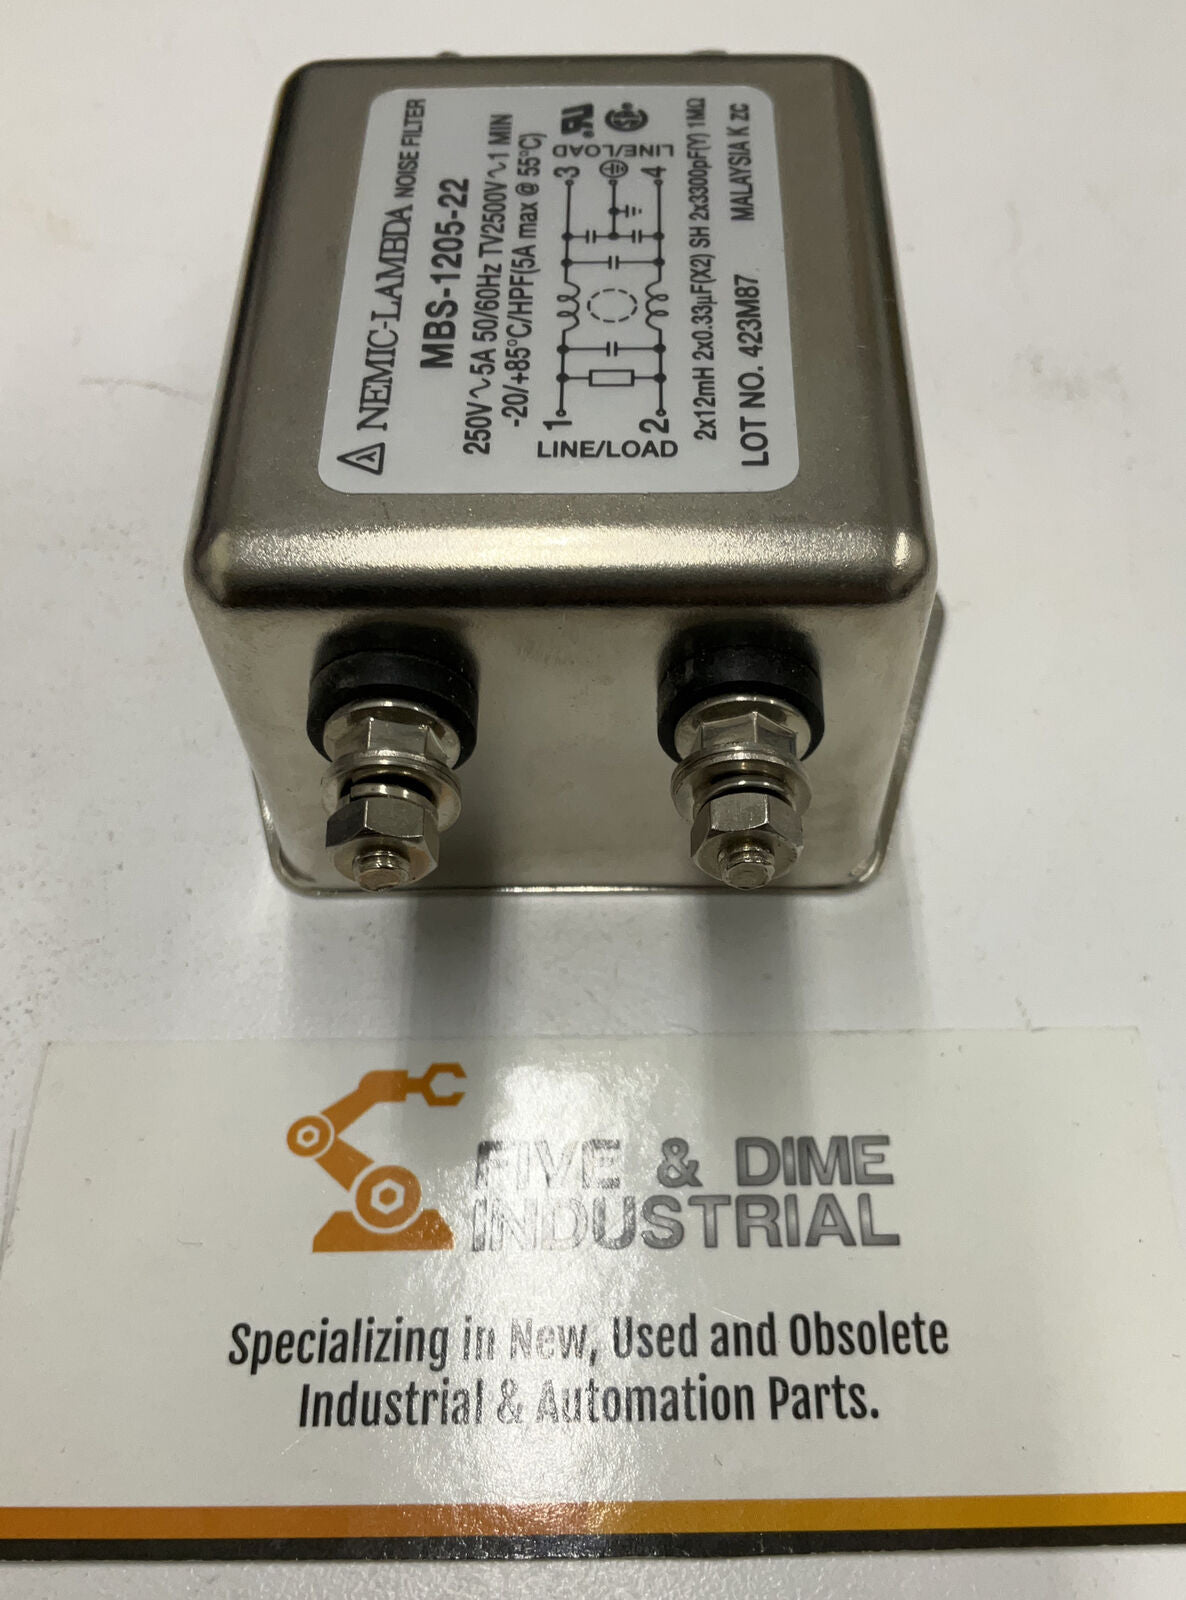 Nemic Lambda MBS-1205-22 Noise Filter 250V AC (RE104)